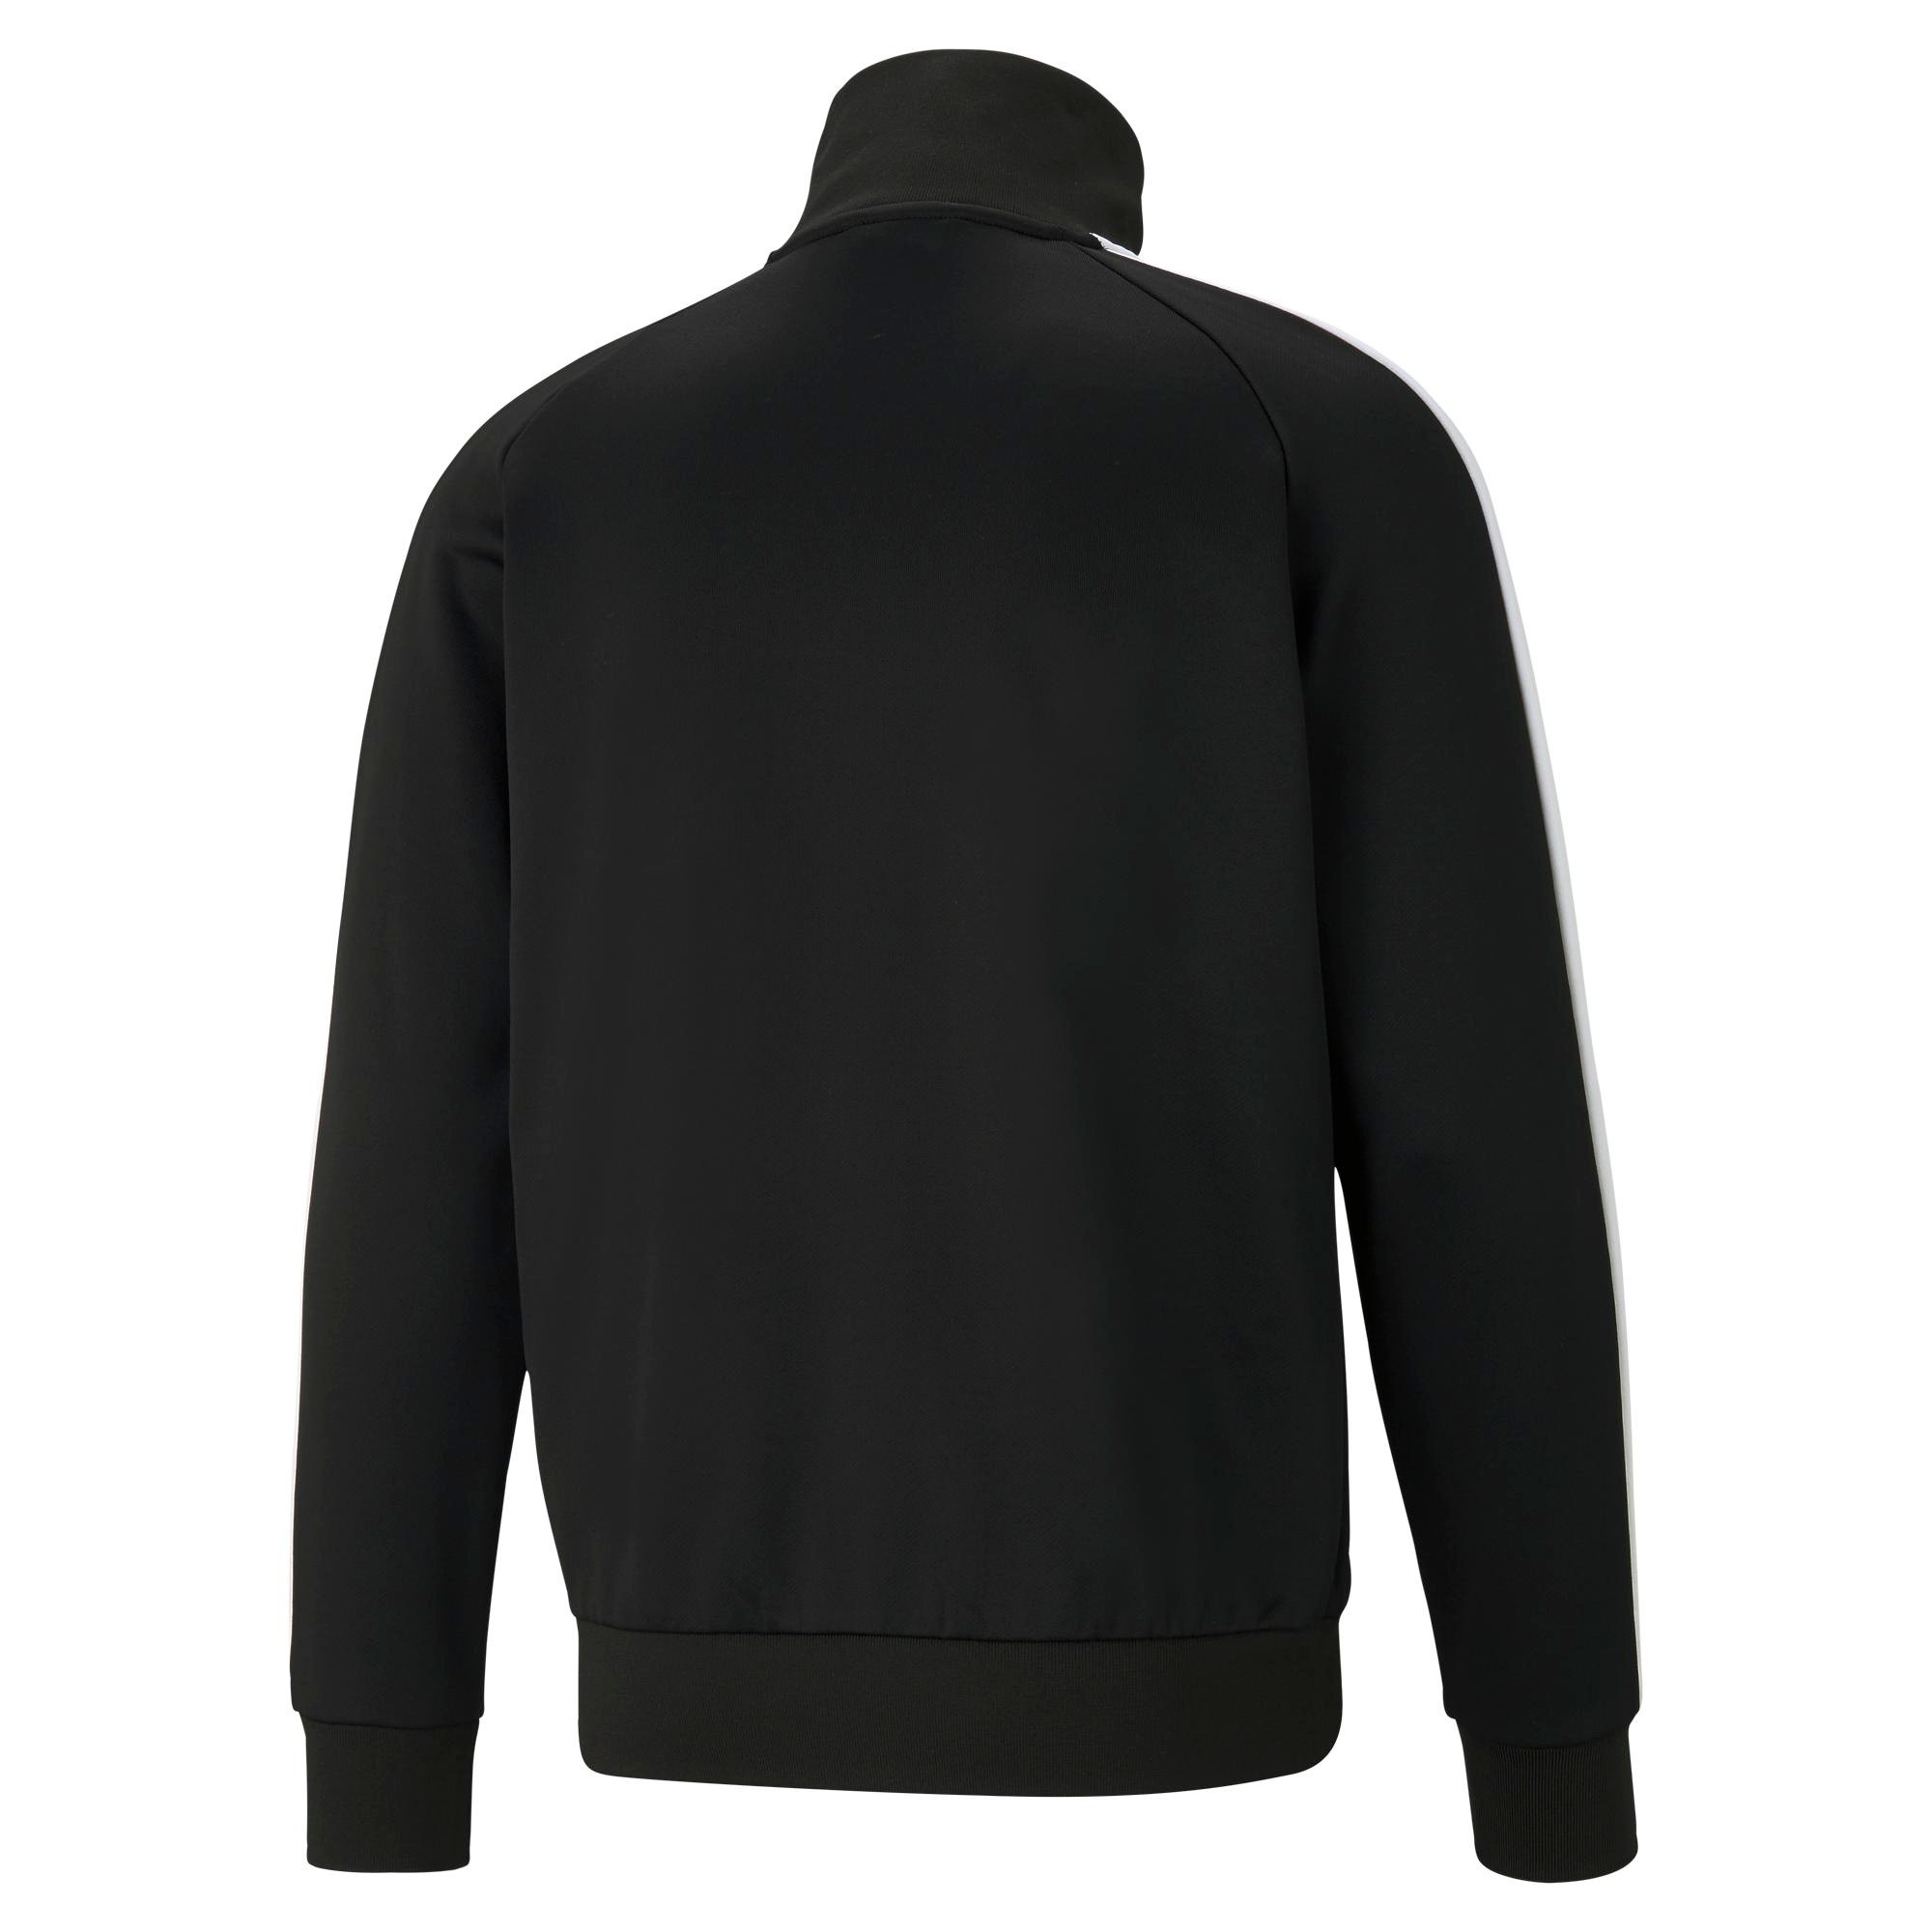 Puma - Sport jacket, Black, large image number 1